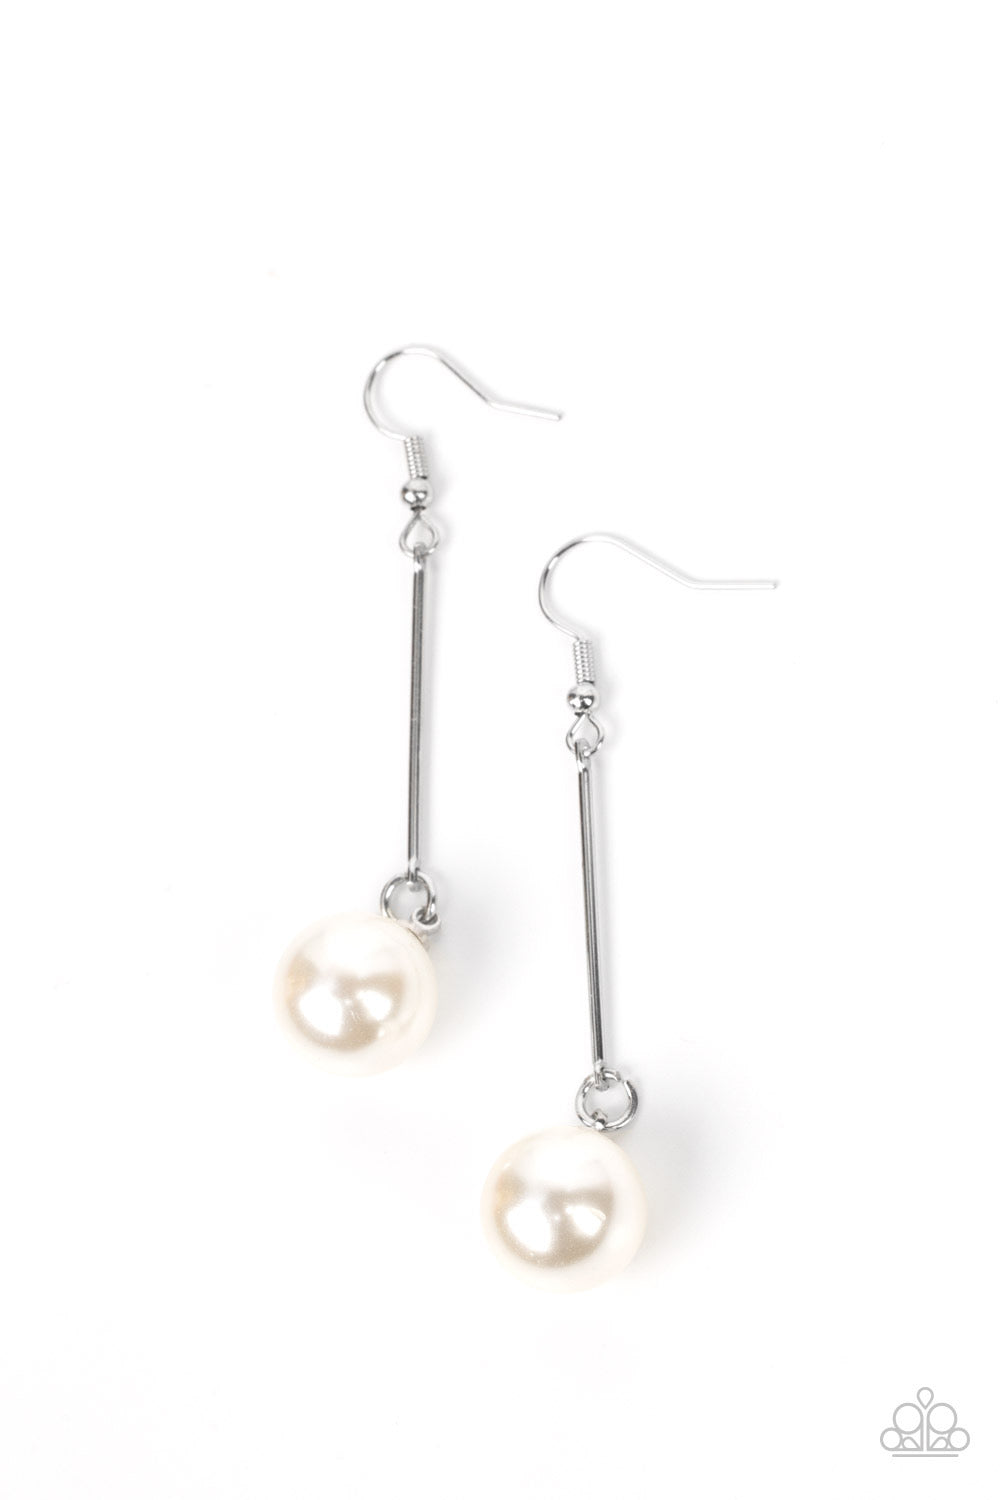 Pearl Redux - White Earrings - Dangle Pearl Earrings Paparazzi Jewelry Images 